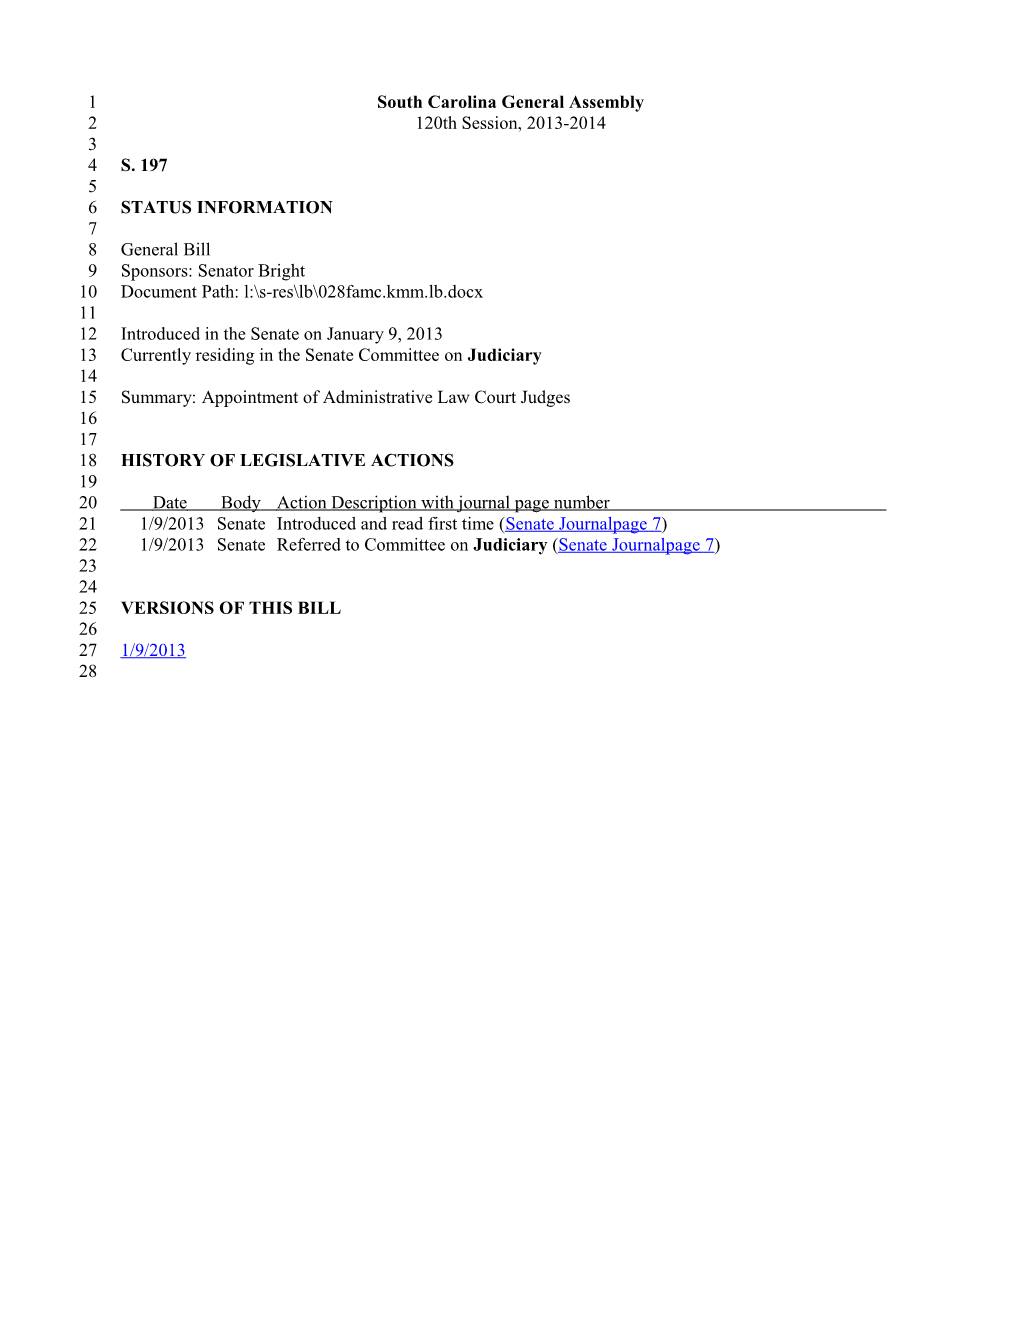 2013-2014 Bill 197: Appointment of Administrative Law Court Judges - South Carolina Legislature